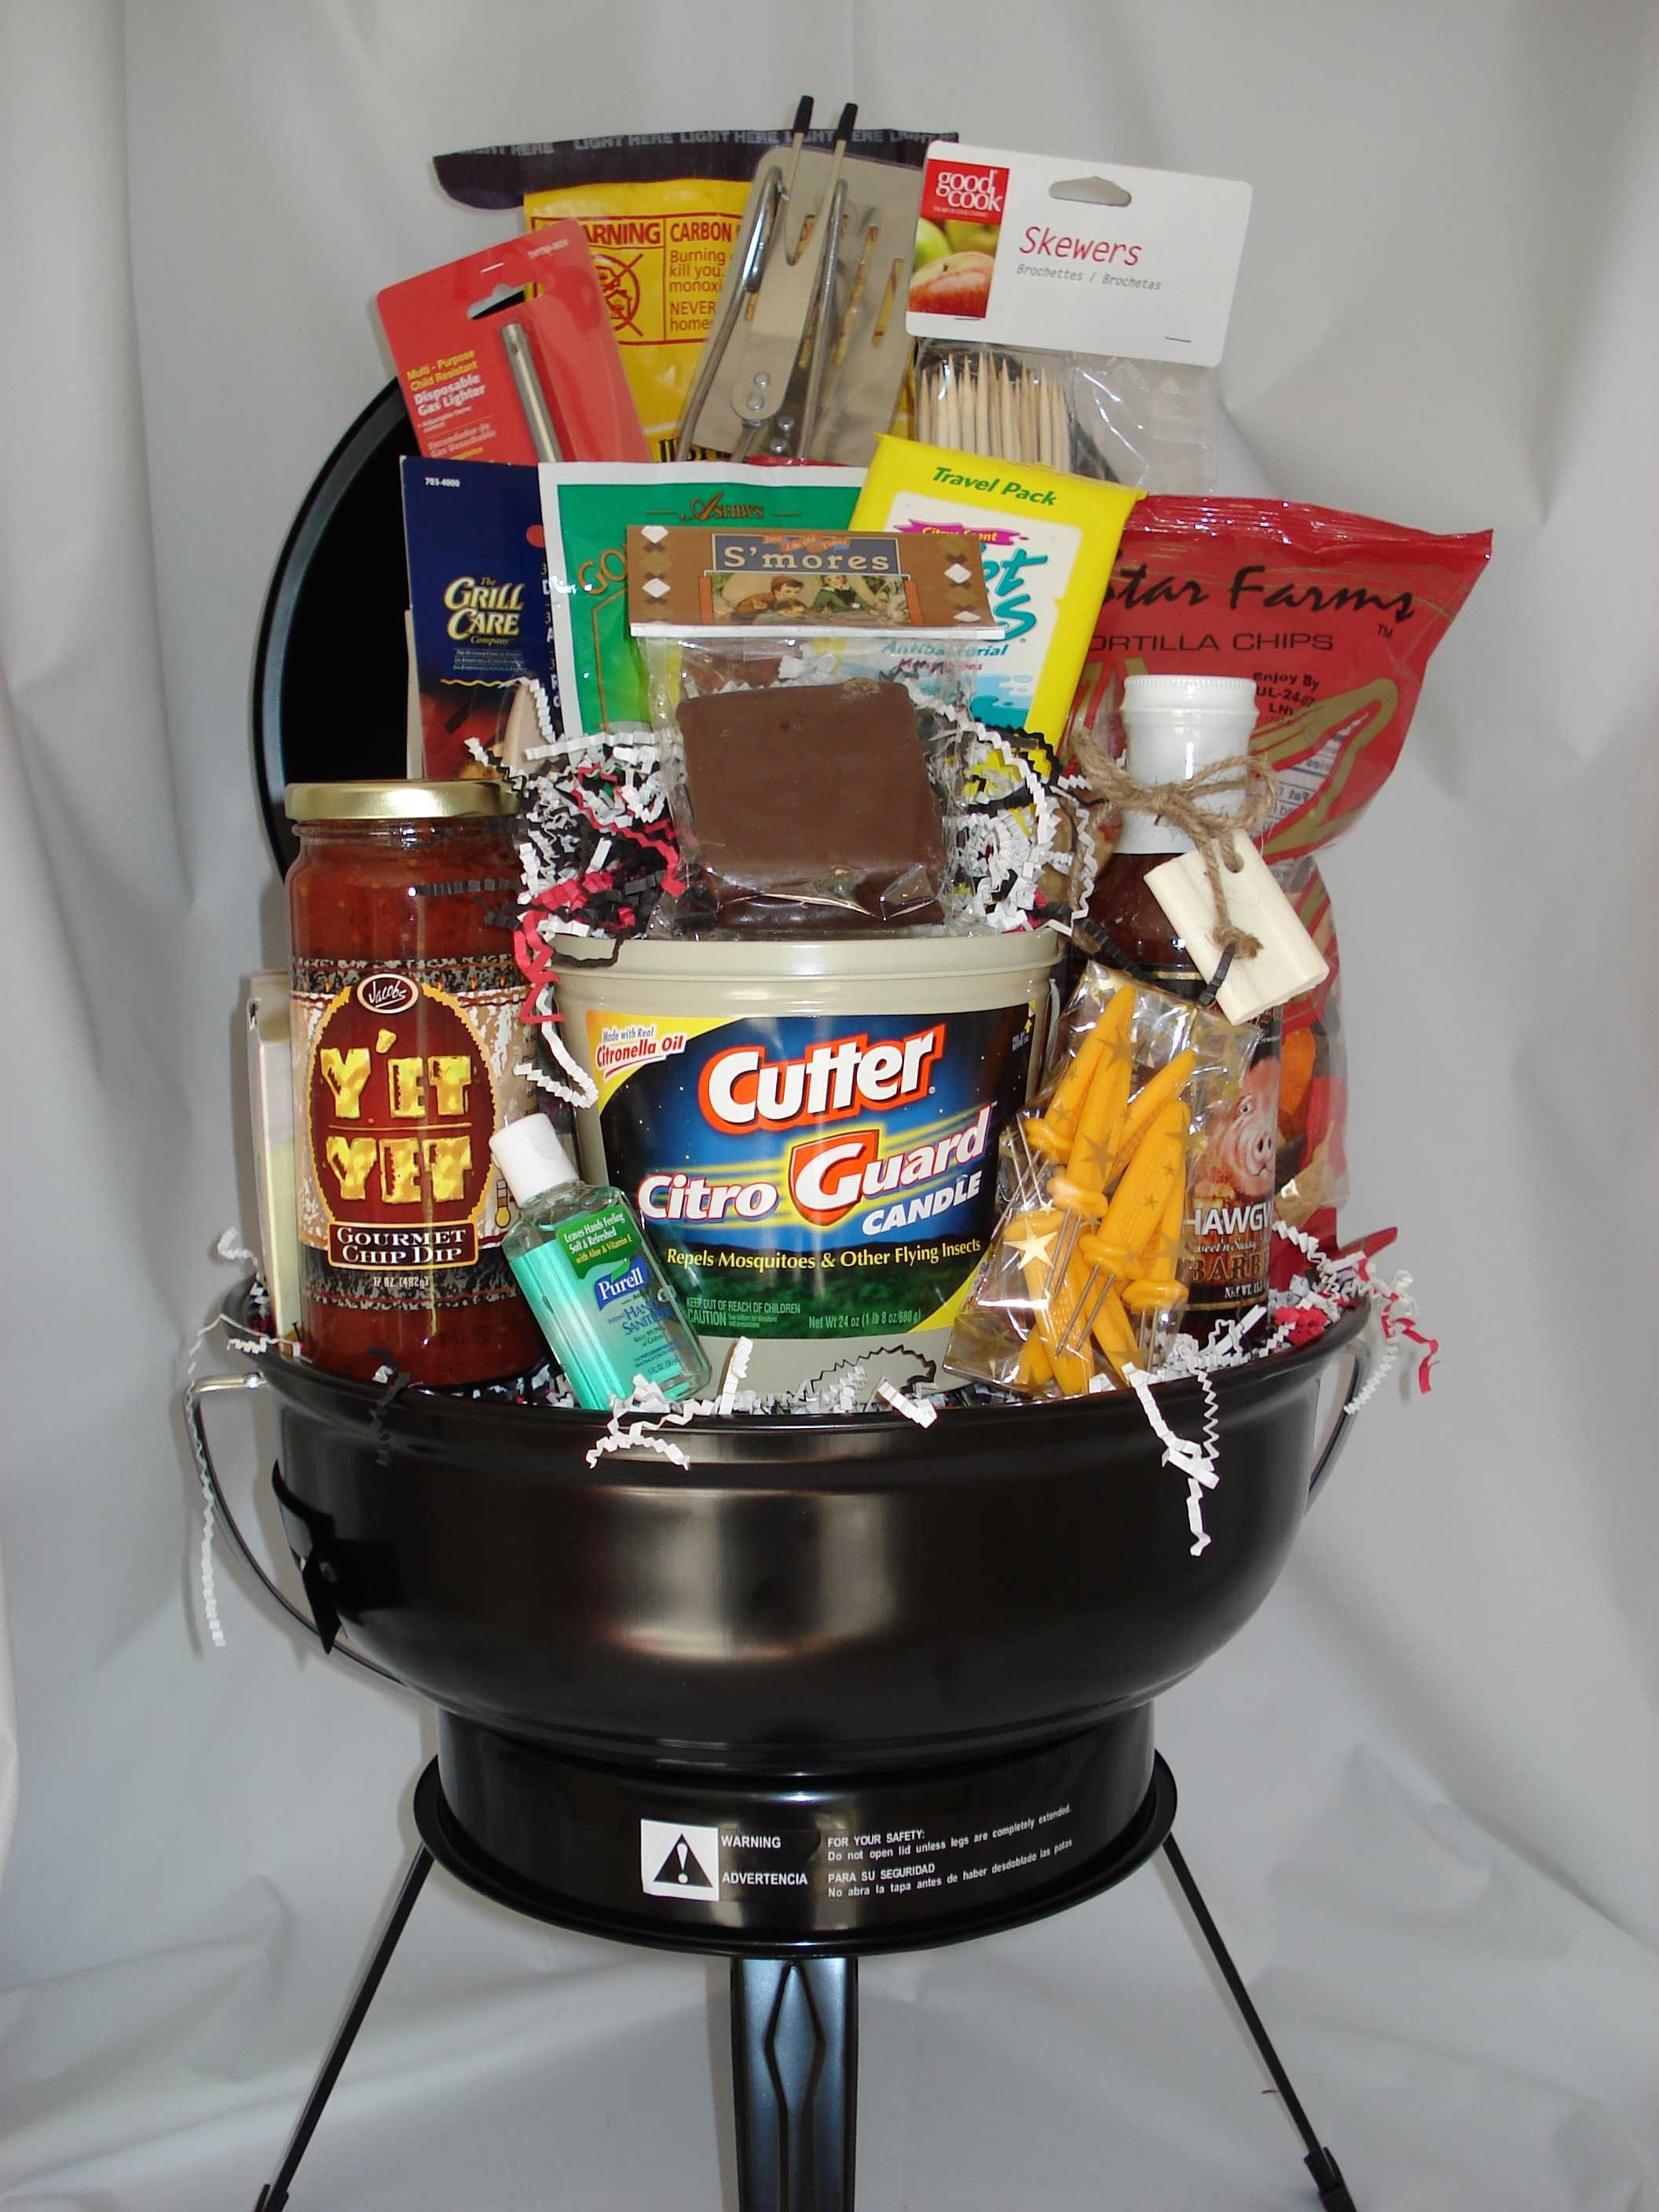 Best ideas about Gift Basket Ideas For Raffles
. Save or Pin Diaper Raffle Gift Basket Ideas Now.